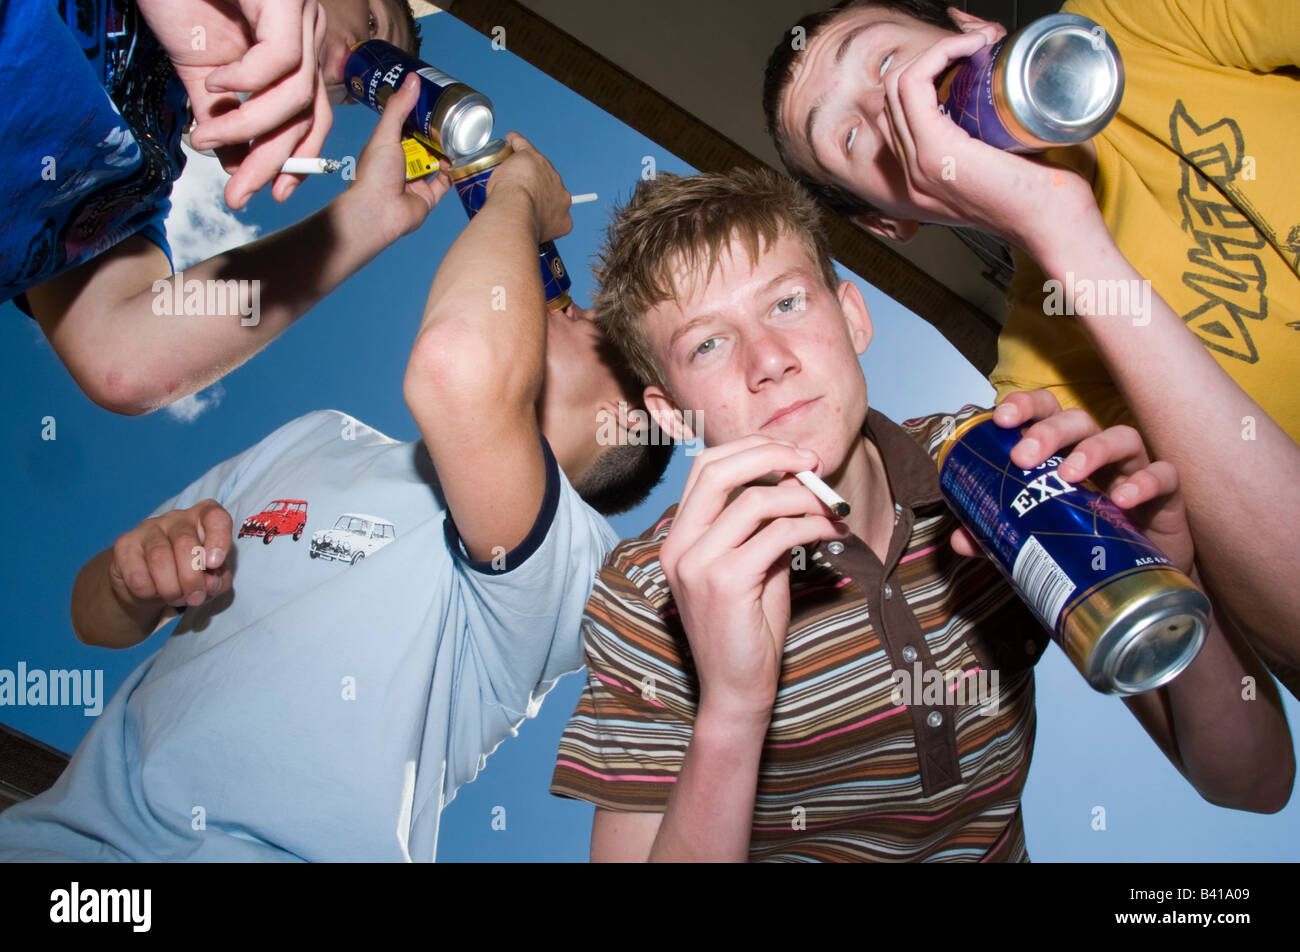 Teenage boys in Street mobile phones fighting drinking smoking Model  Released Shoot No 3643 Stock Photo - Alamy